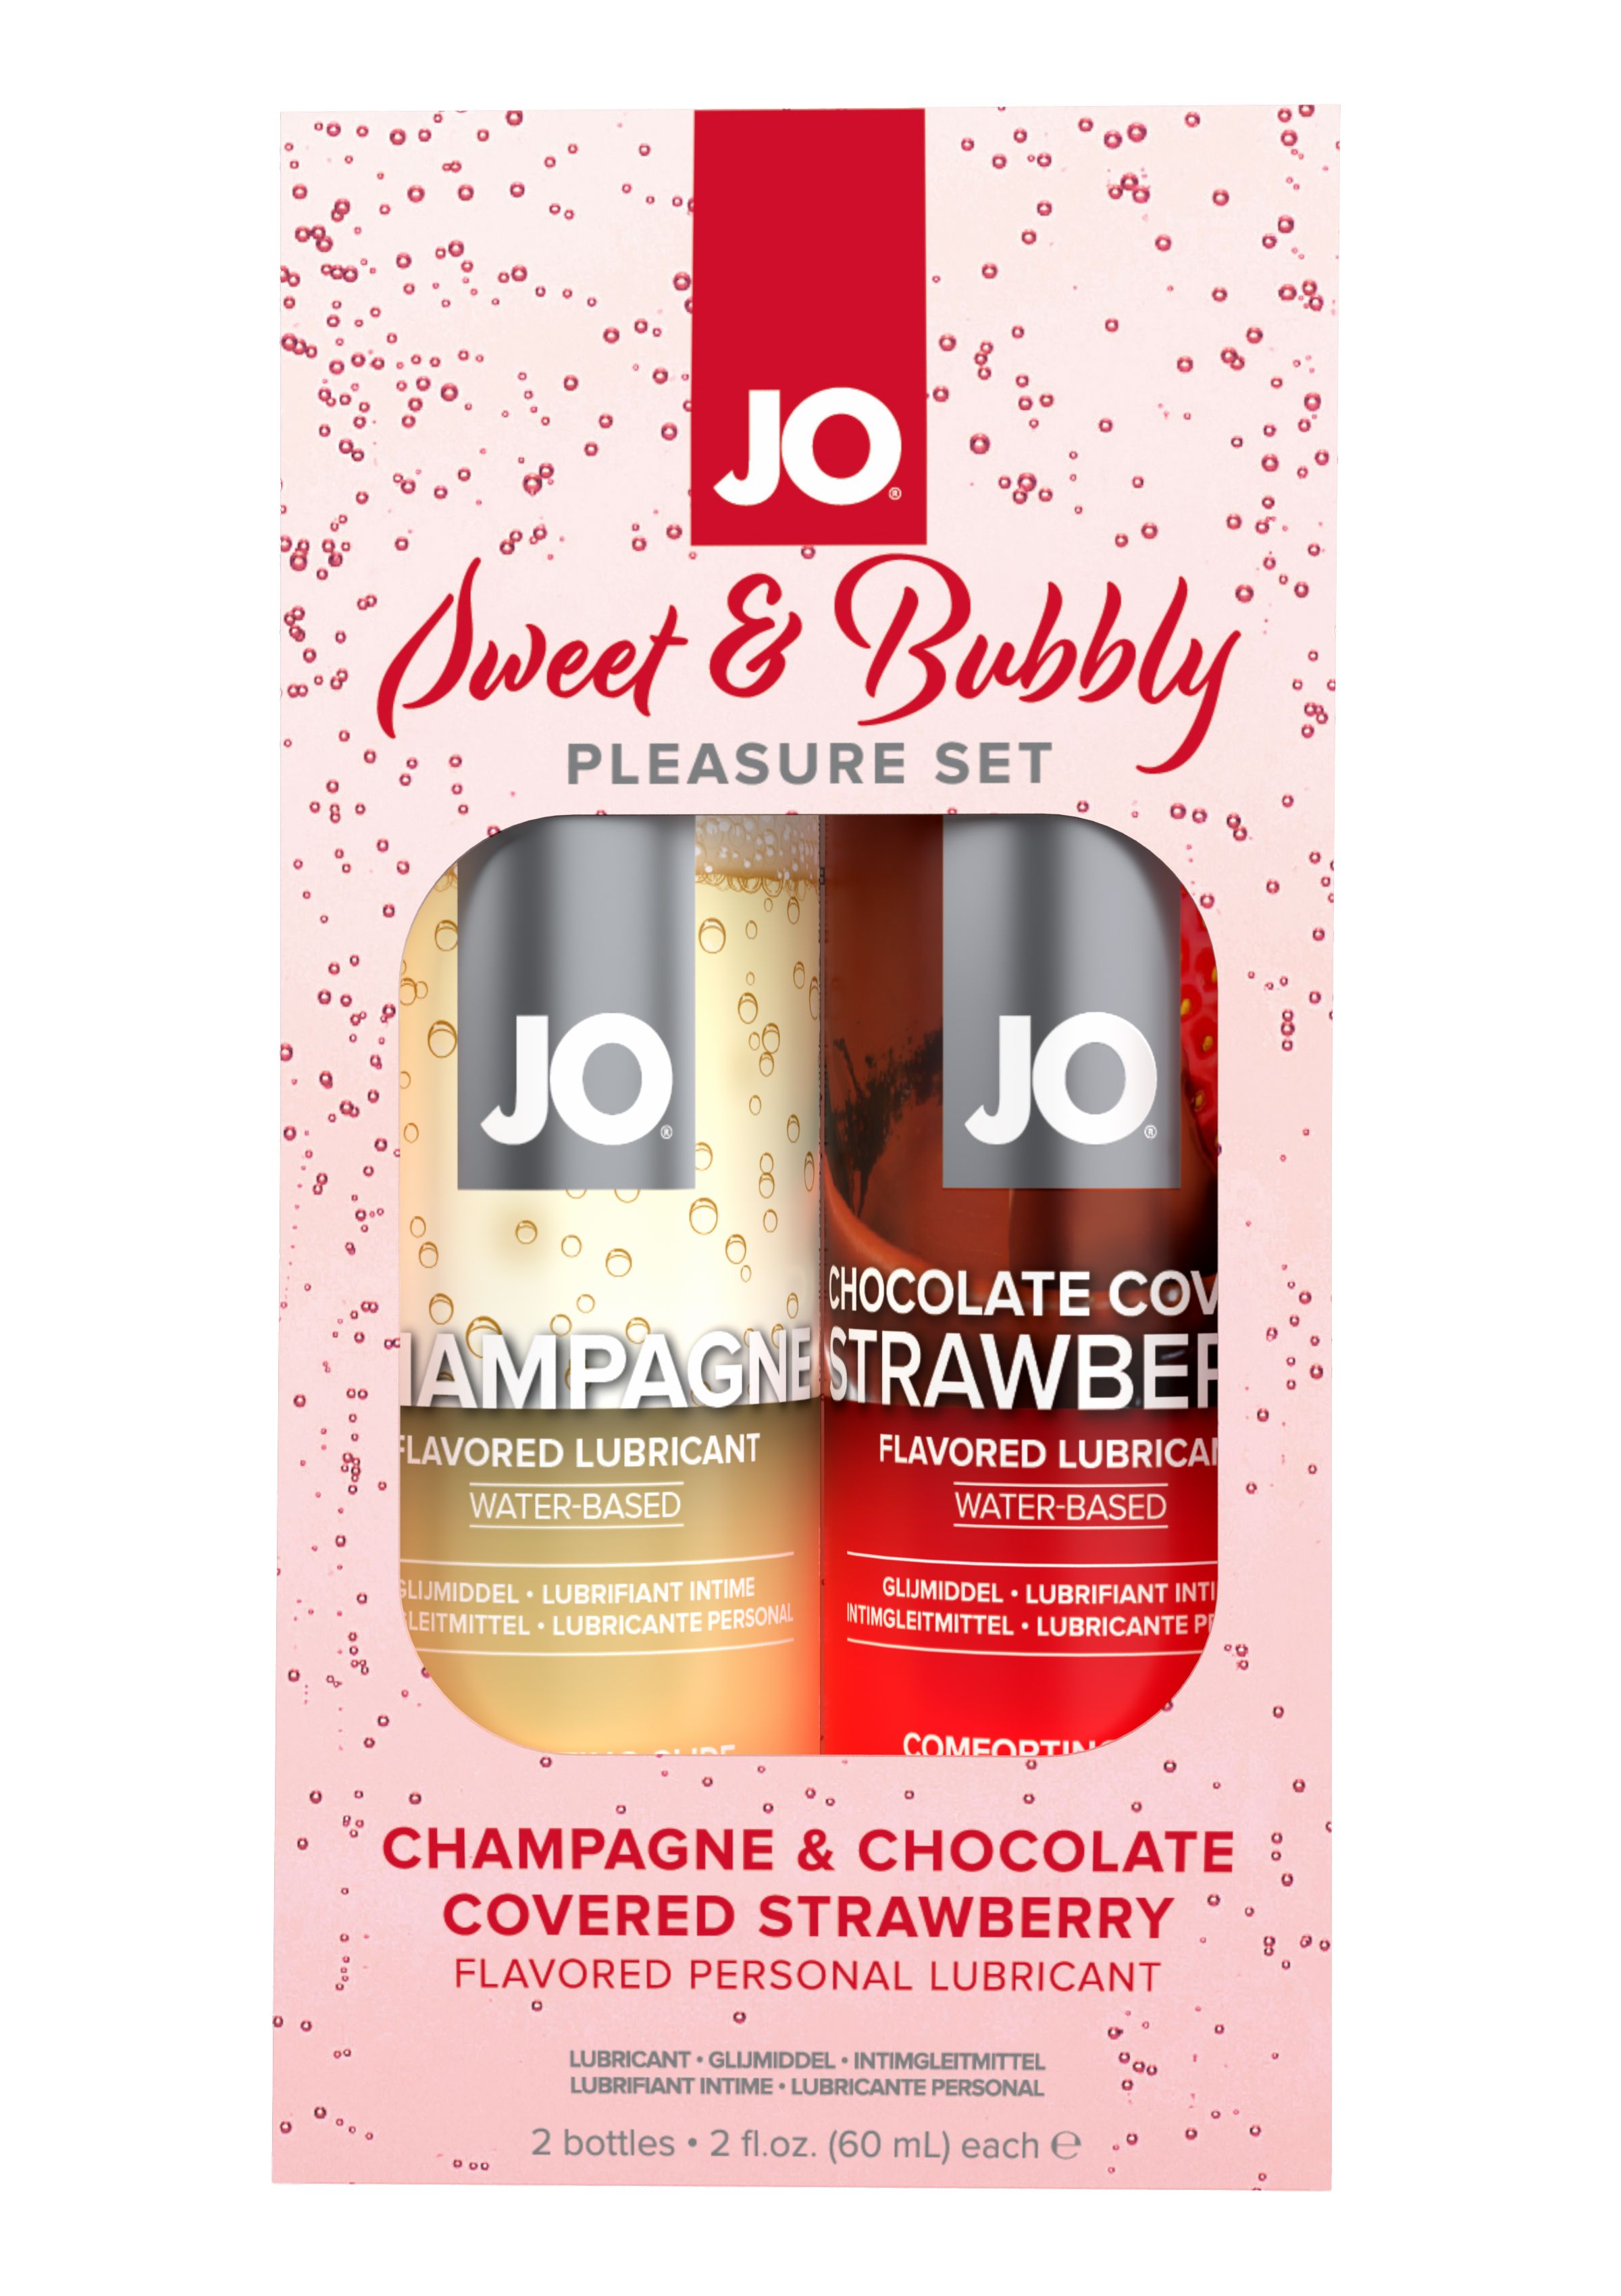 JO SWEET & BUBBLY PLEASURE SET CHAMPAGNE/CHOCOLATE STRAWBERRY